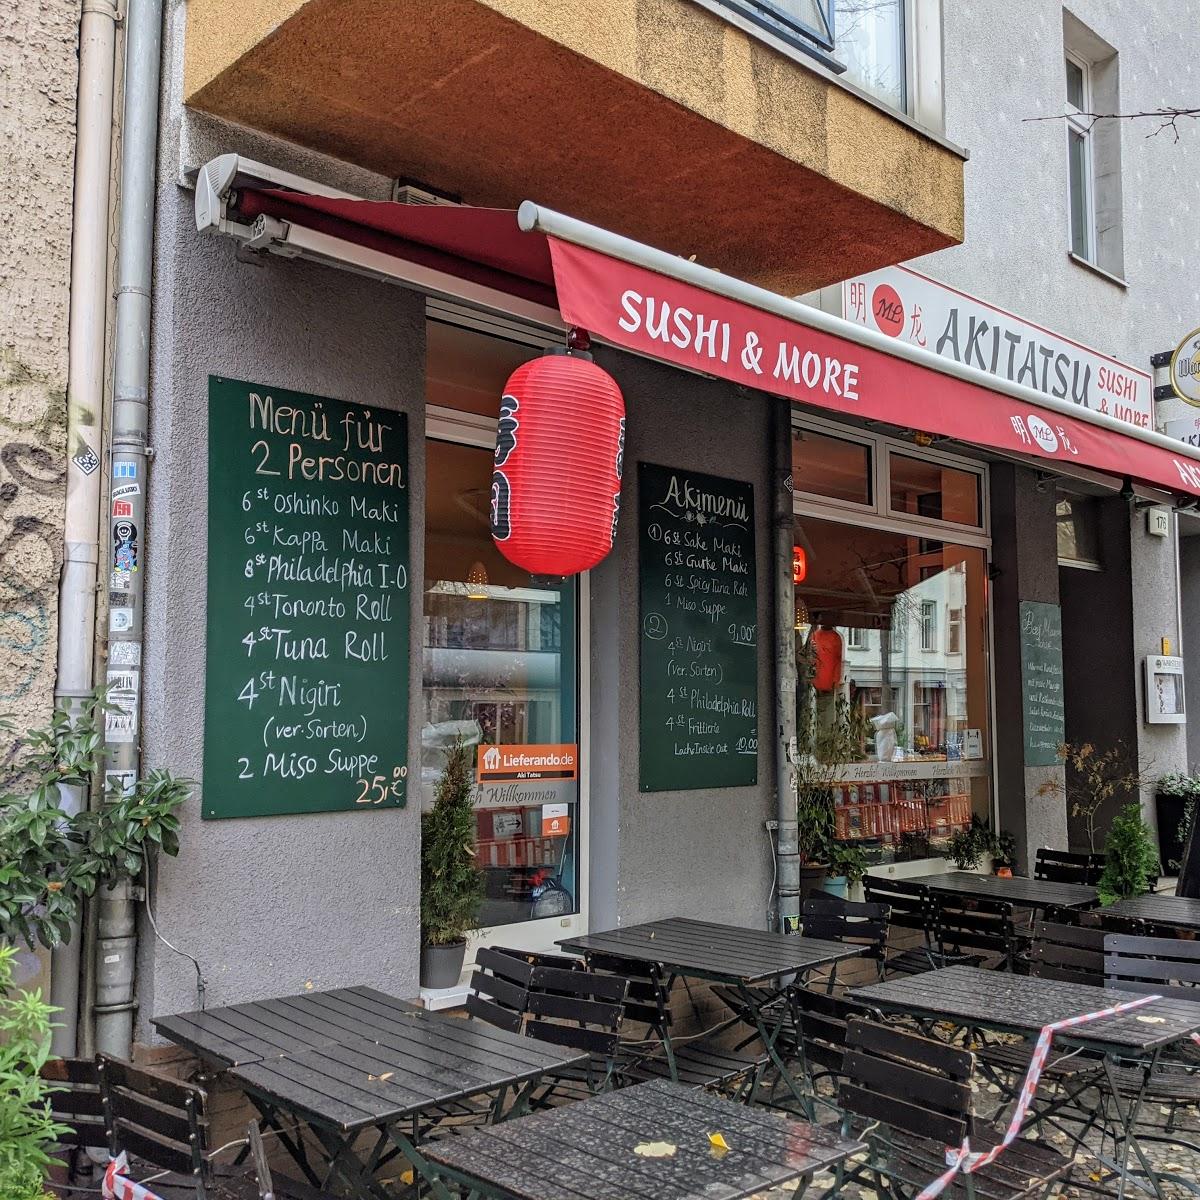 Restaurant "Aki Tatsu Sushi & more" in Berlin